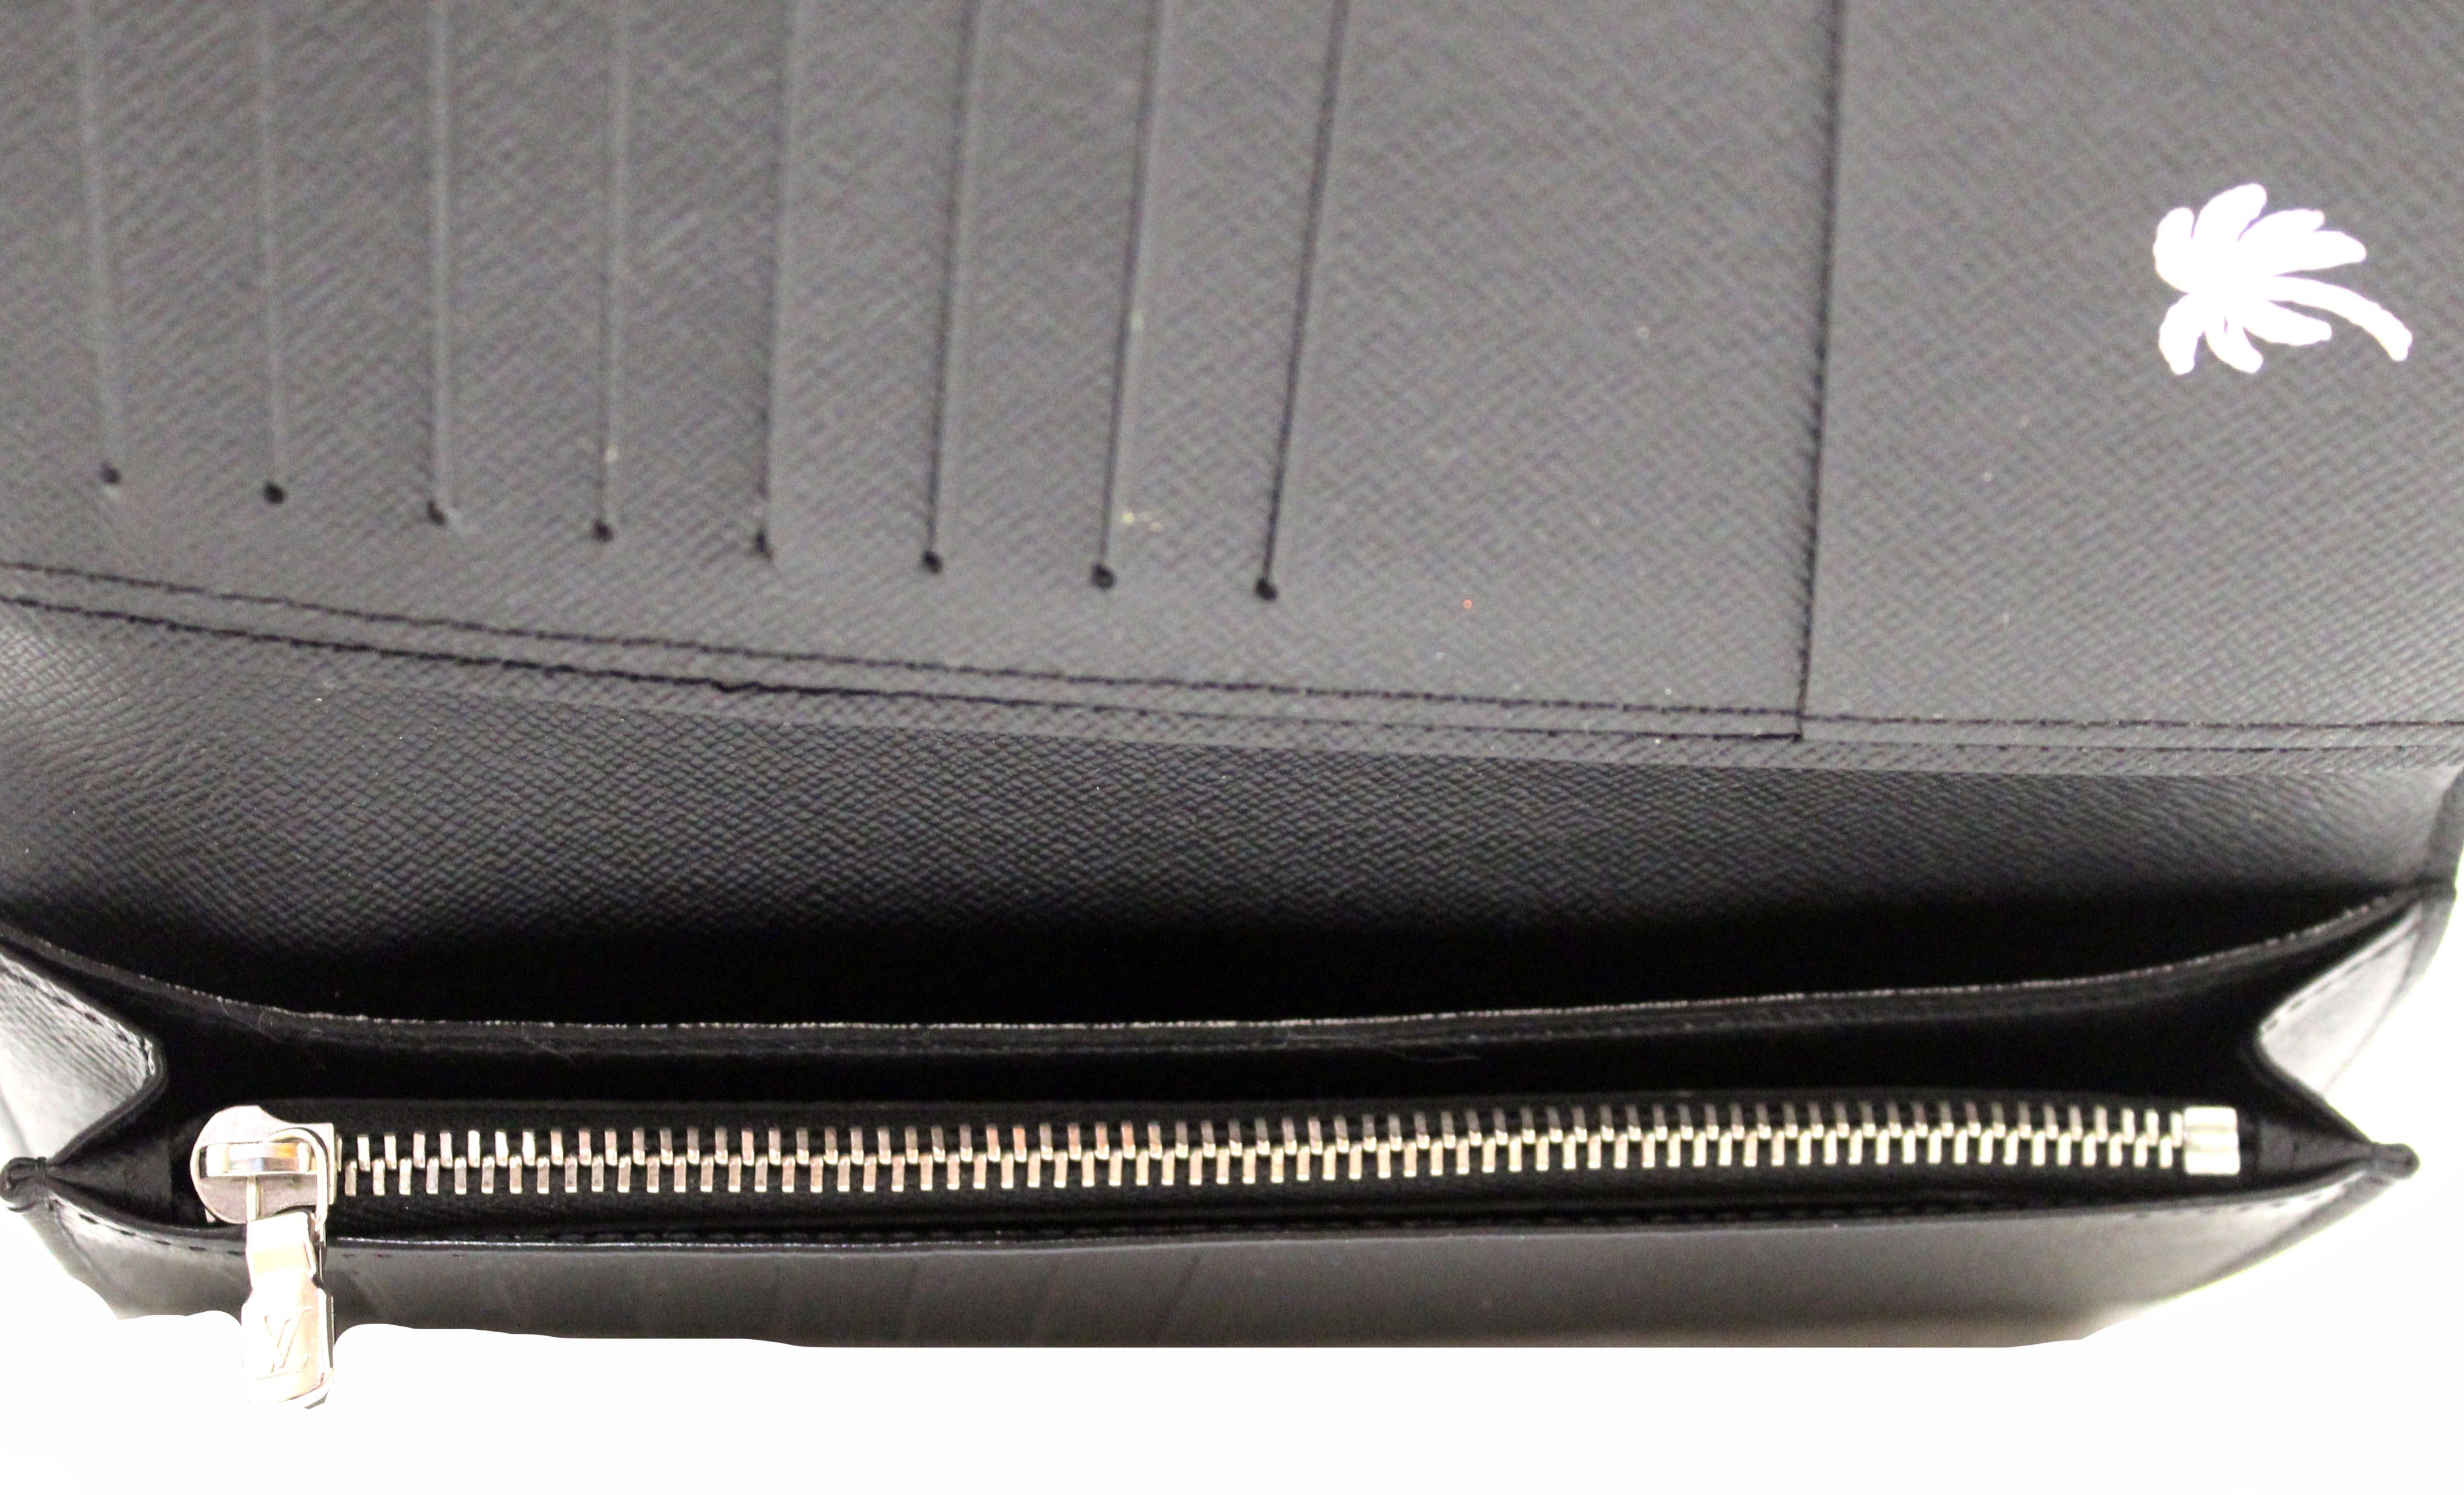 Shop Louis Vuitton DAMIER GRAPHITE Brazza wallet (N62665) by Sincerity_m639